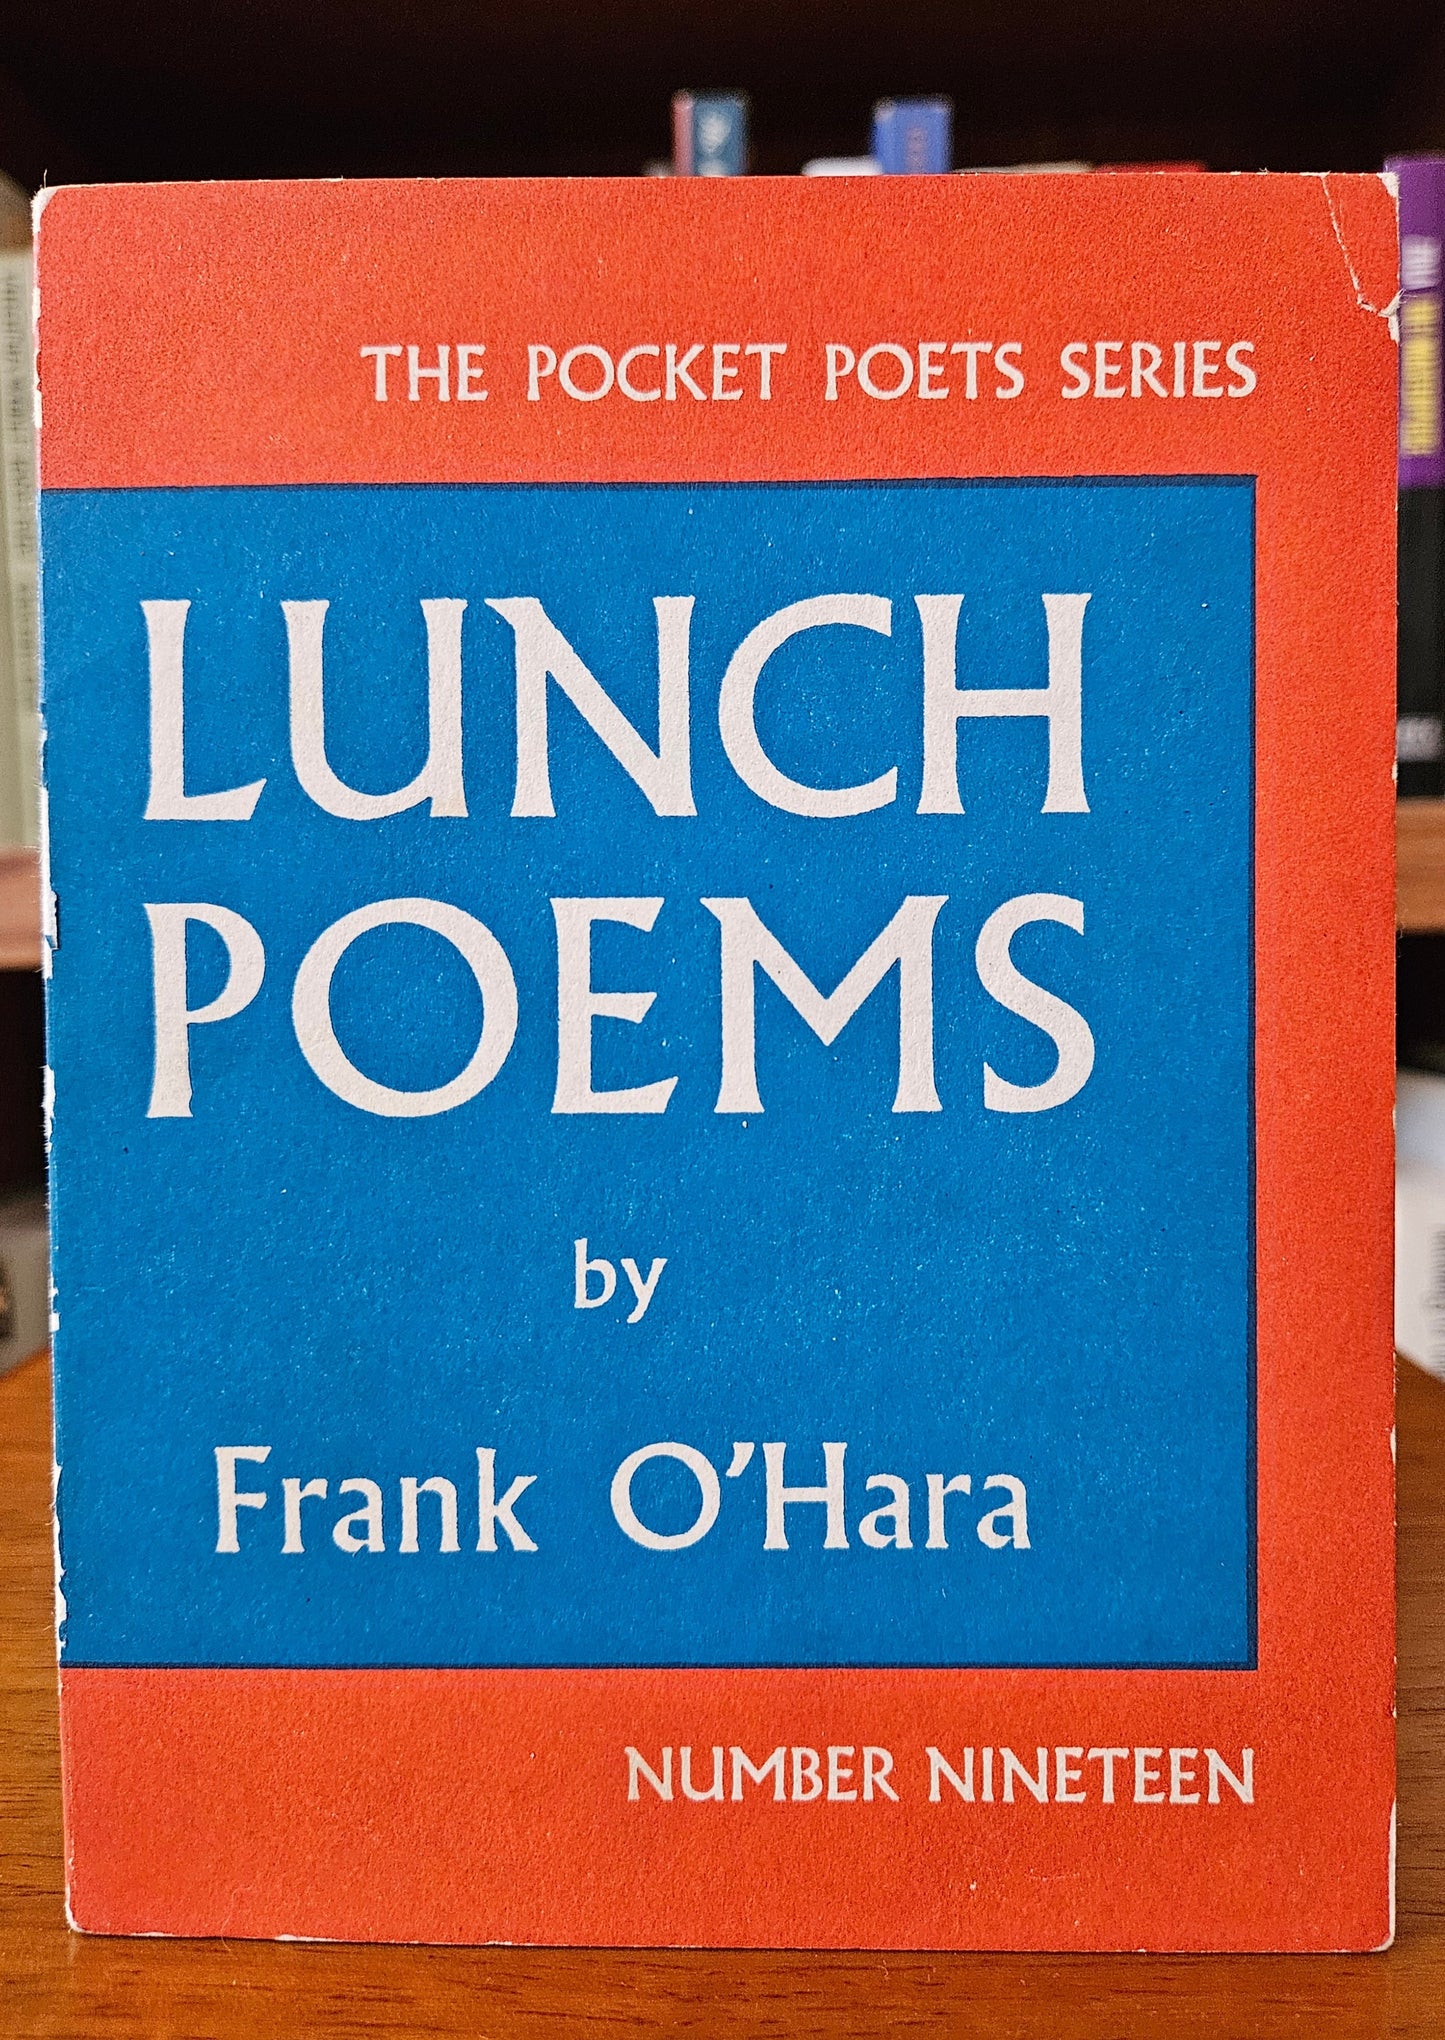 Frank O'Hara - Lunch Poems